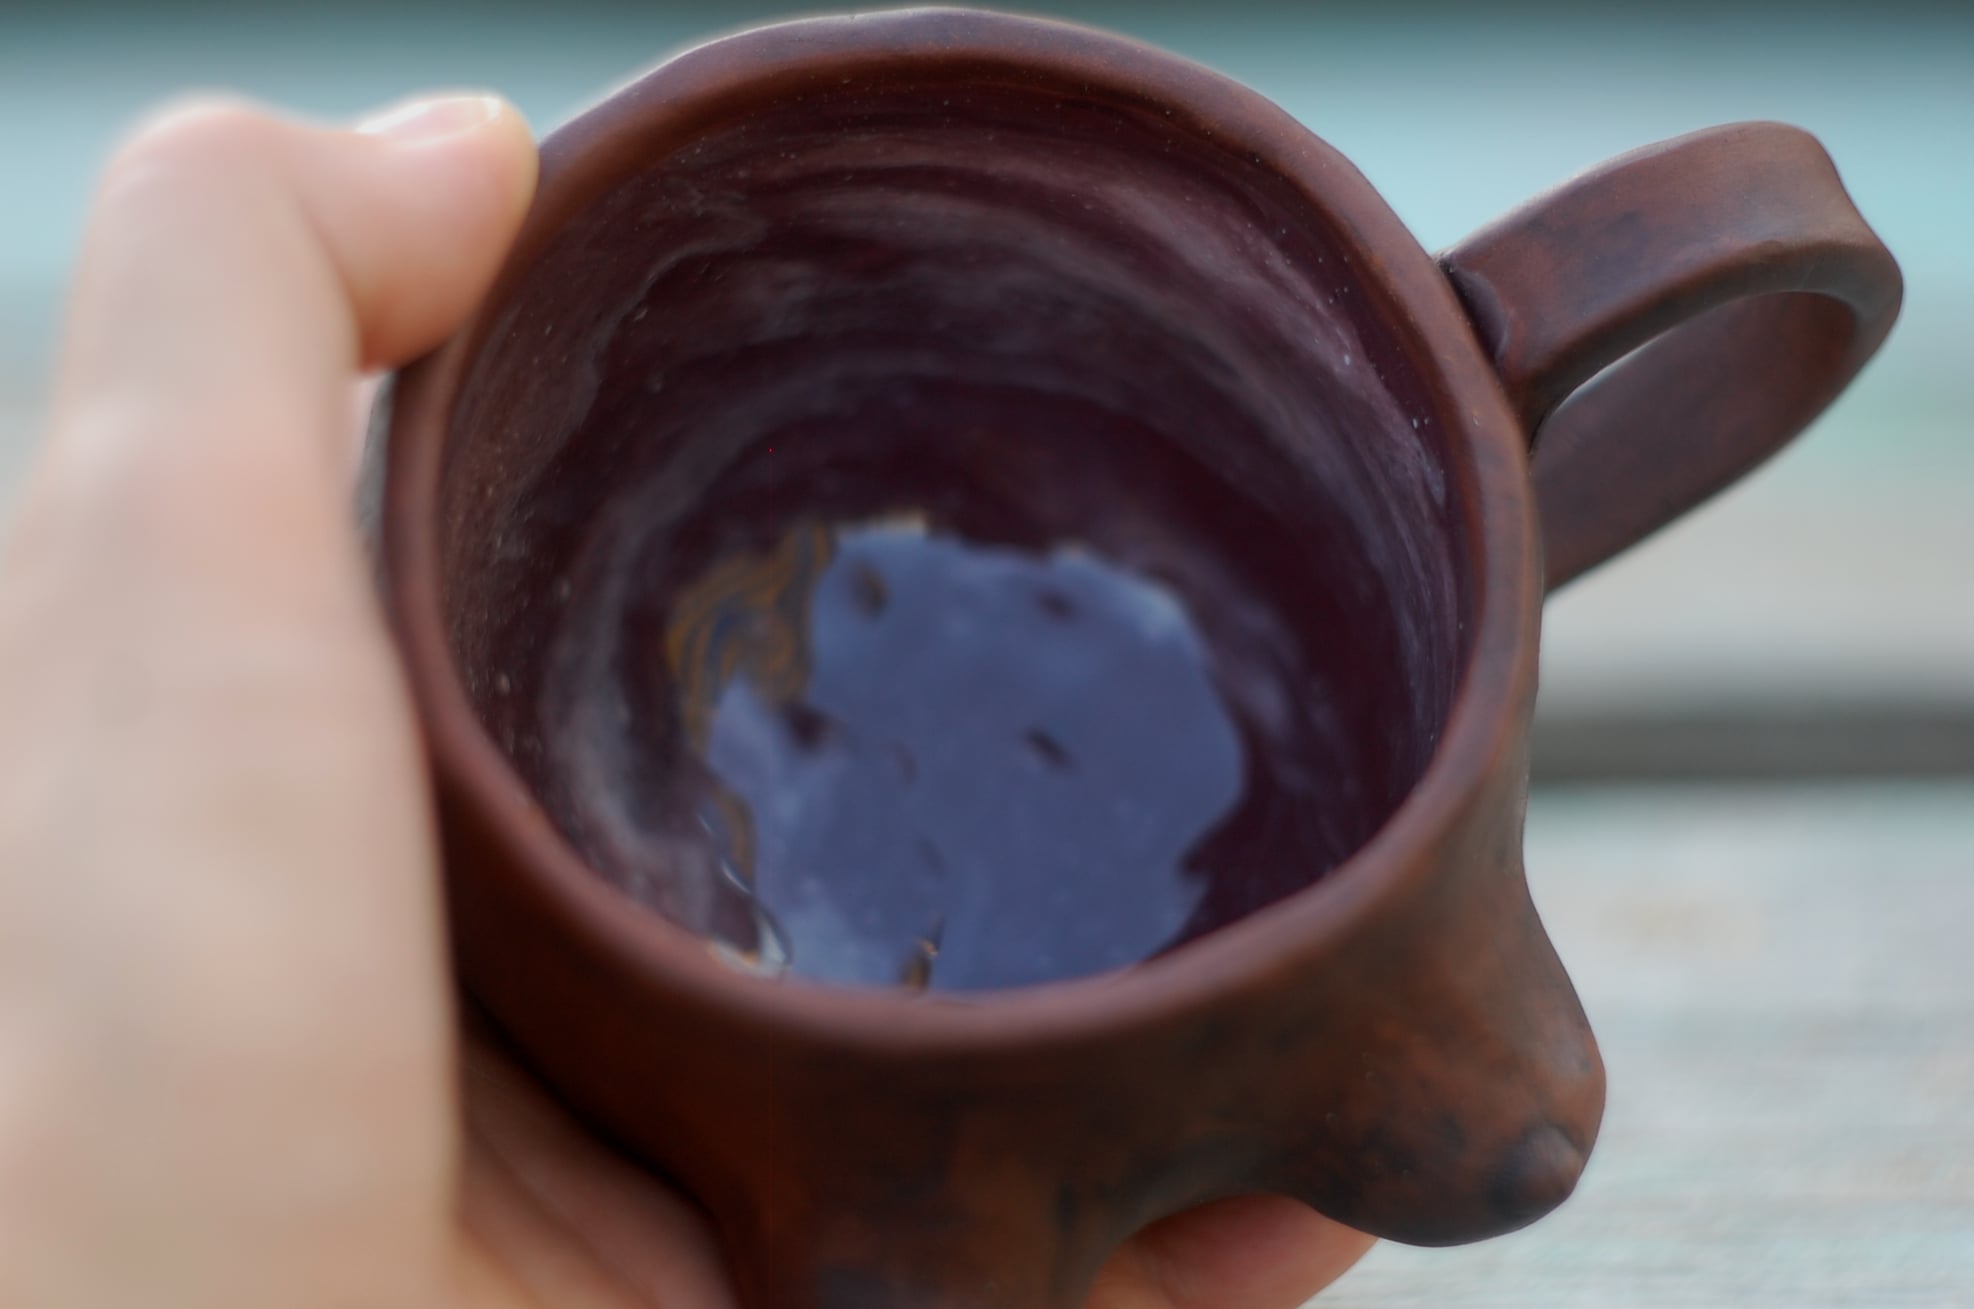 Pottery breast mug (boobs mug) for coffee and tea w/ handle